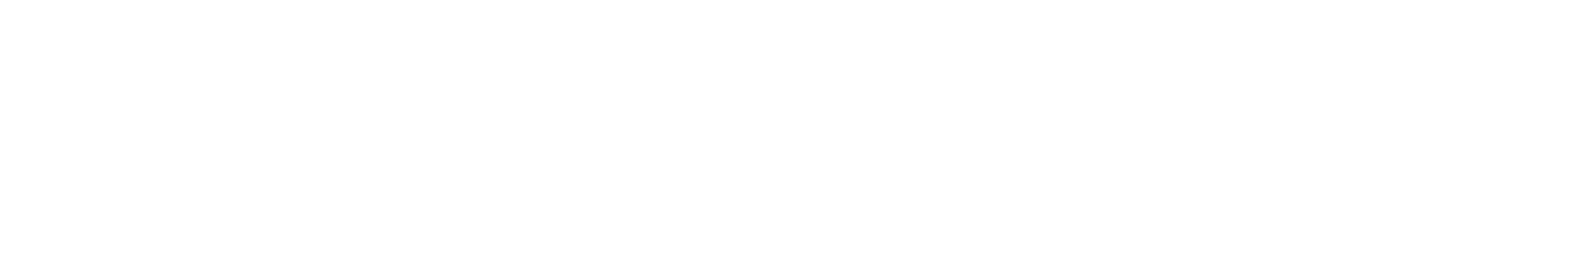 Arendals Fossekompani logo grand pour les fonds sombres (PNG transparent)